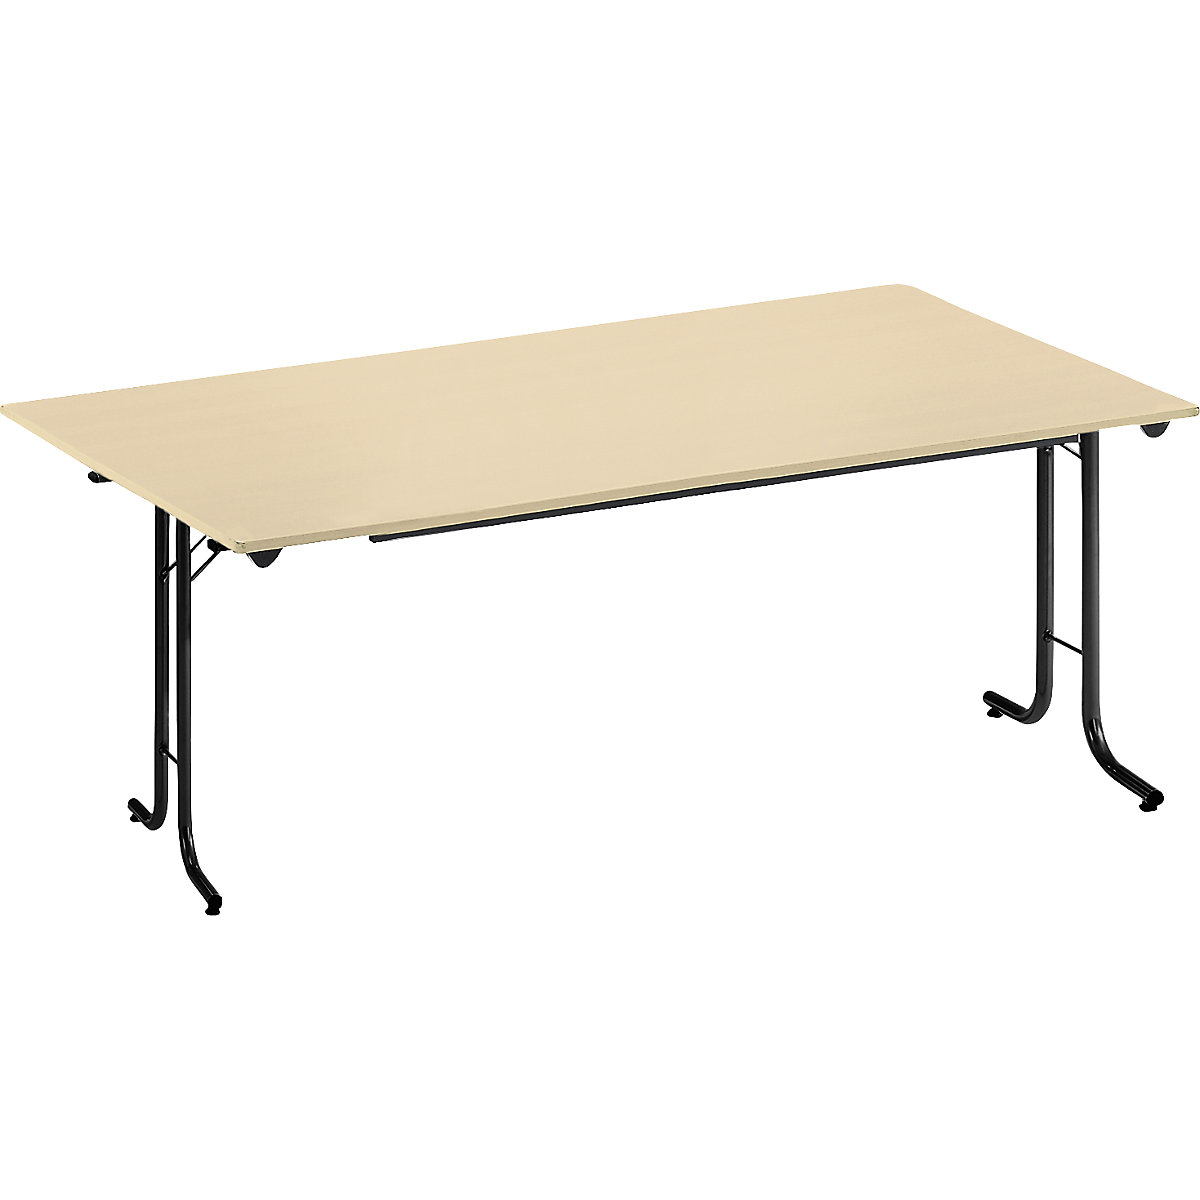 Folding table, with rounded edges, round tubular frame, rectangular top, 1600 x 800 mm, black frame, maple finish tabletop-5